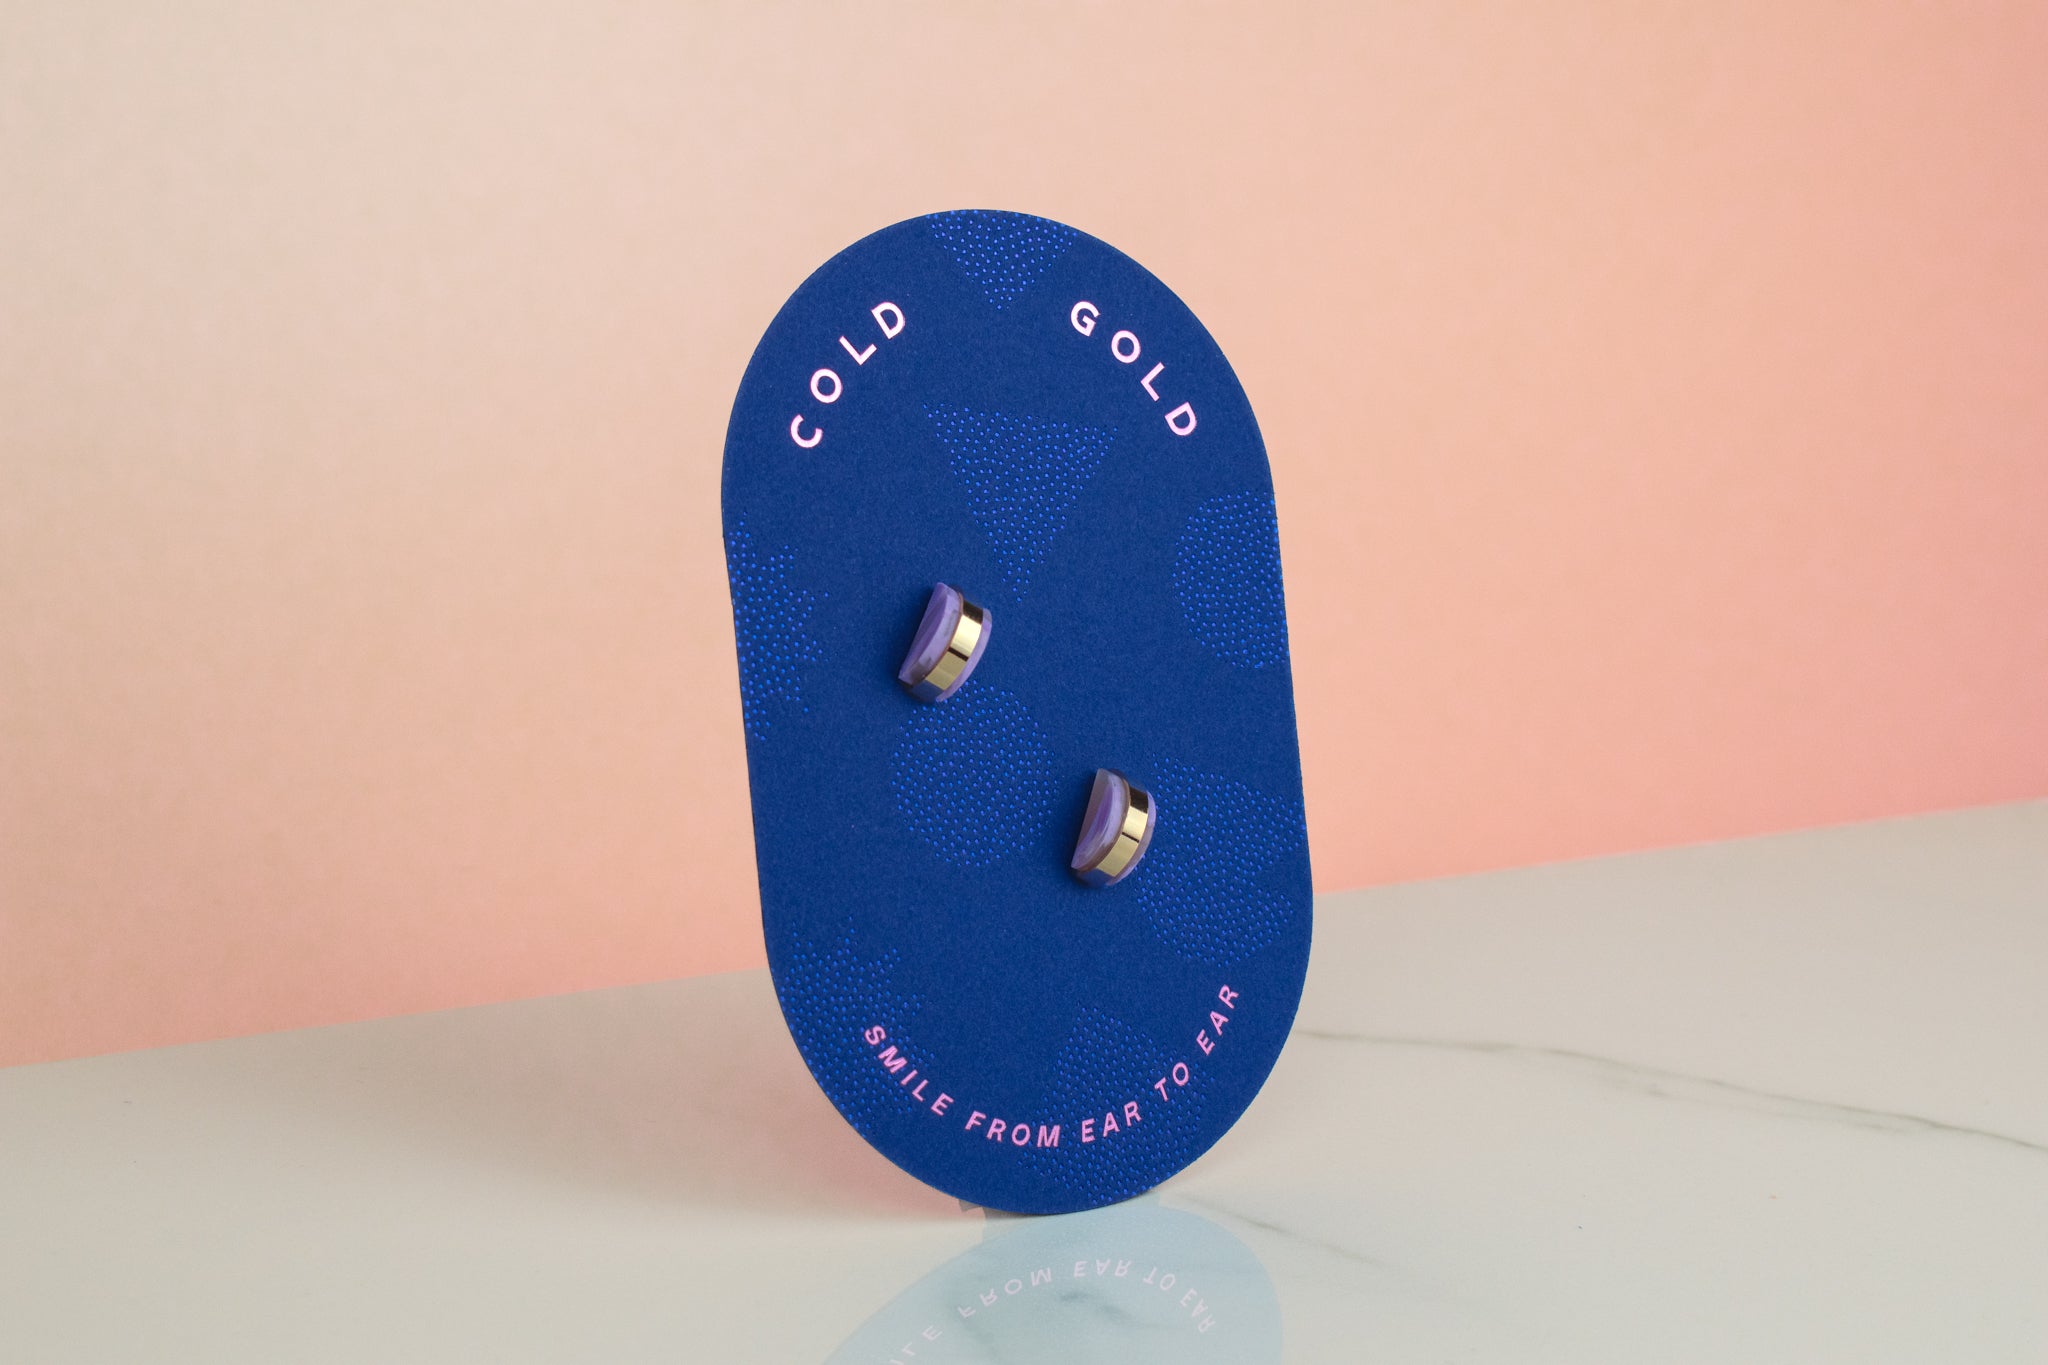 studio 54 inspired geometric stud pastel marble earrings displayed on blue pill shaped card